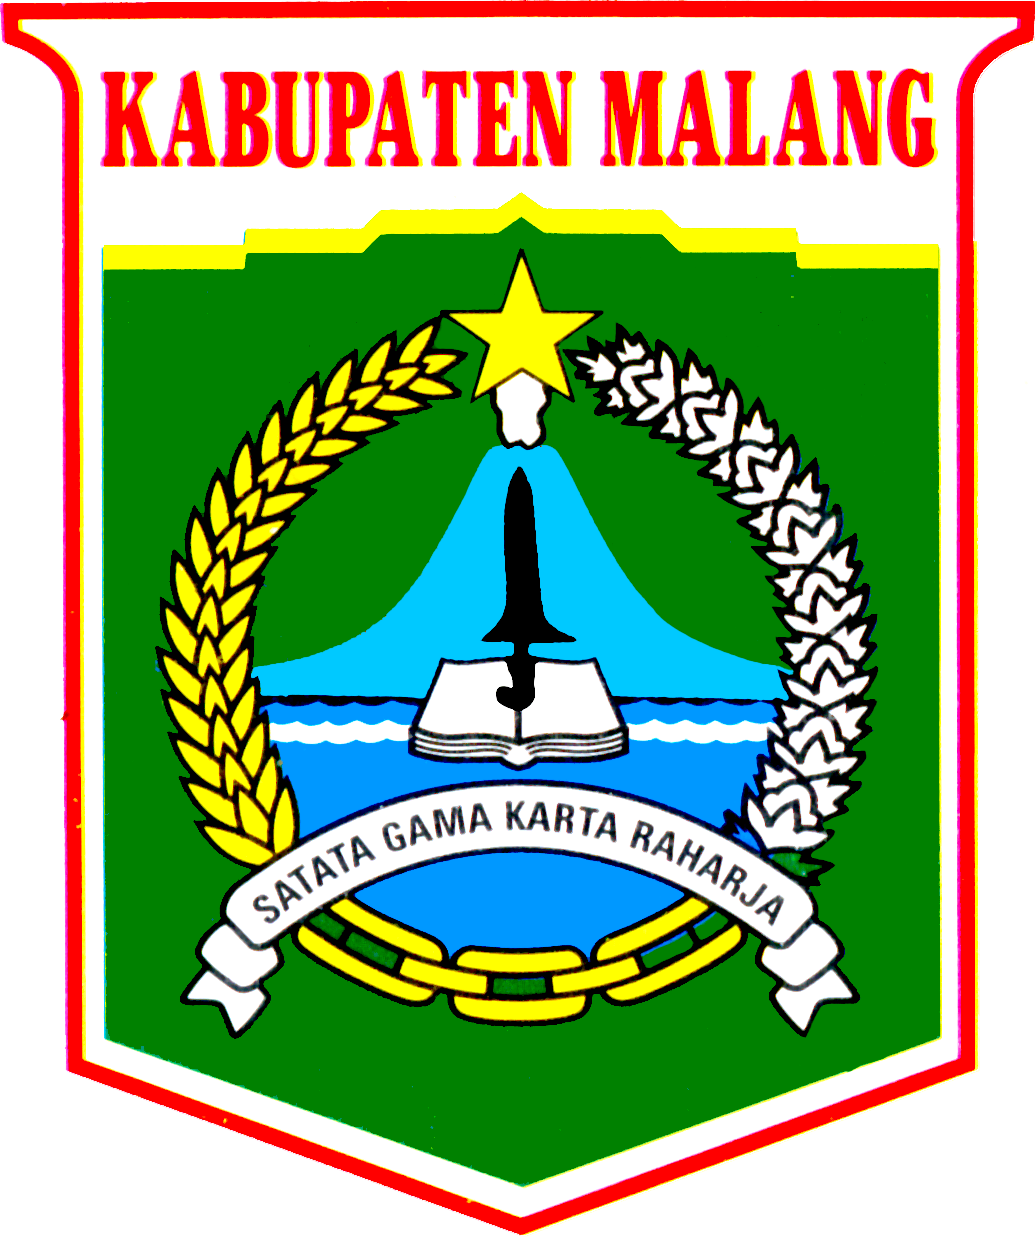 Kabupaten Malang  madep manteb